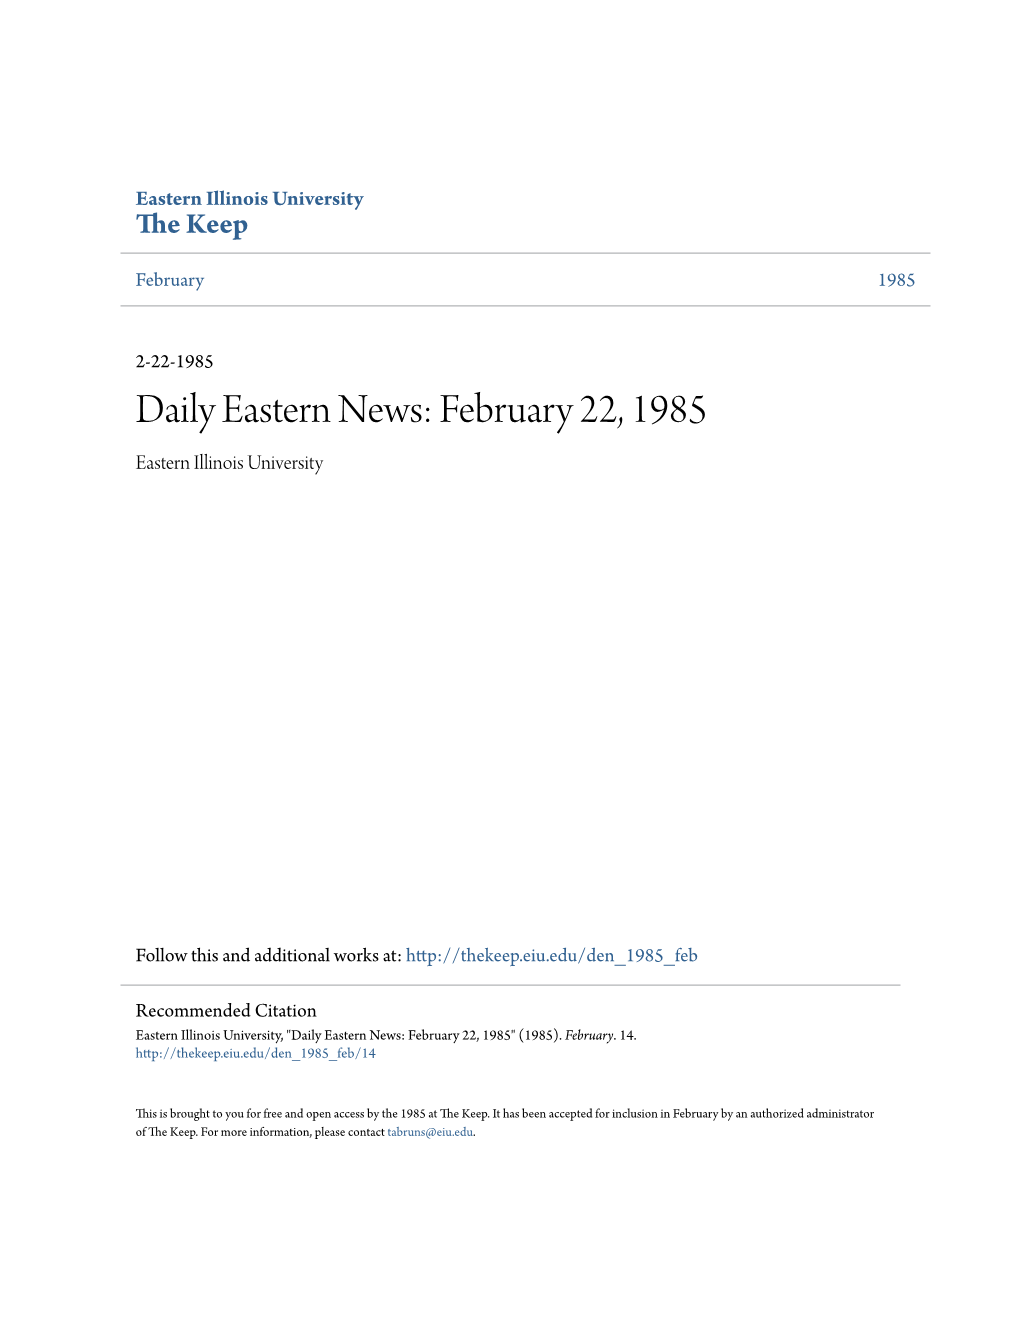 Astern News: February 22, 1985 Eastern Illinois University